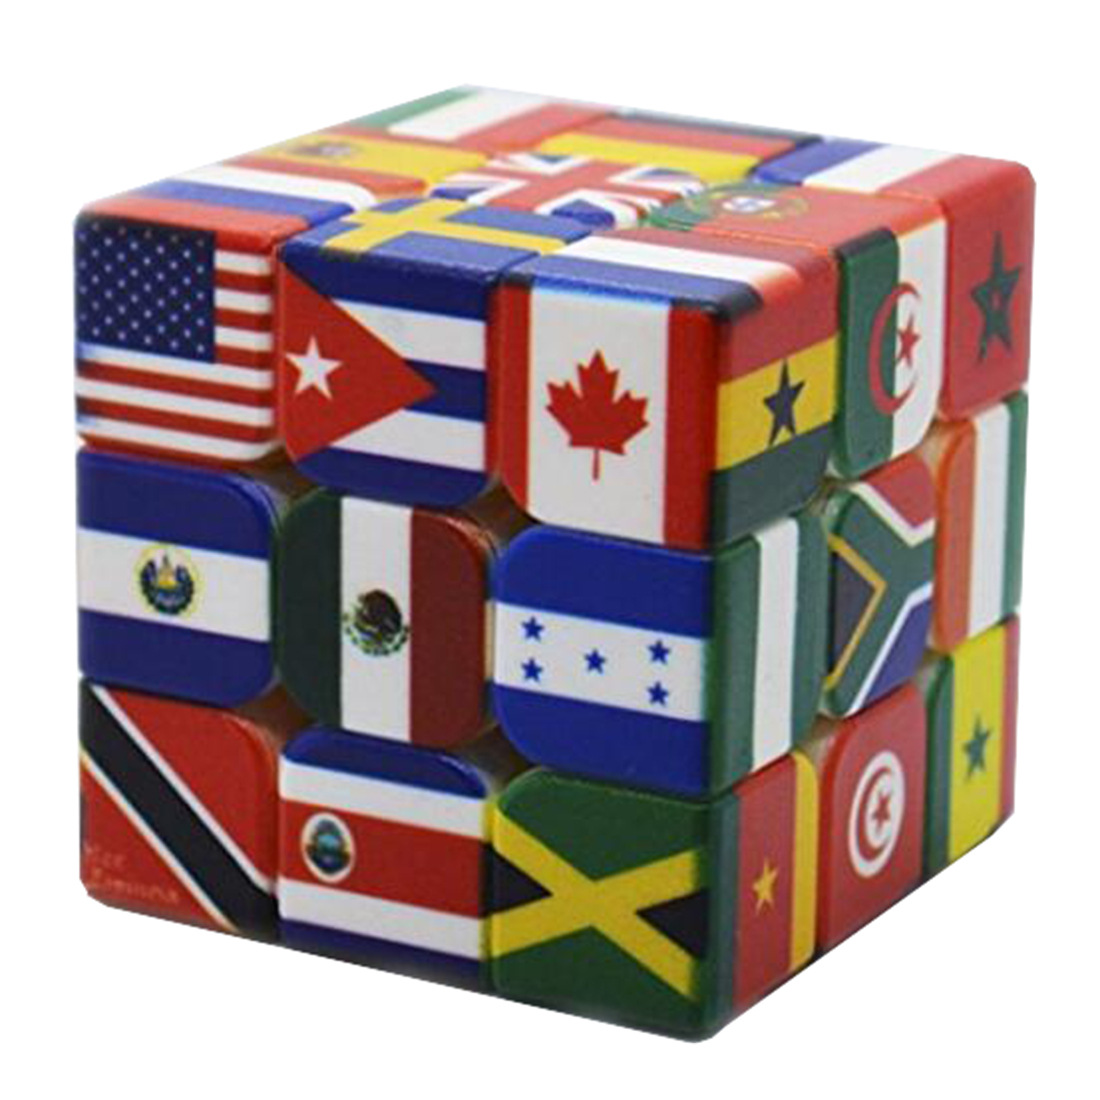 UV Printed 3x3 National Flag Magic Cube (Colorful)